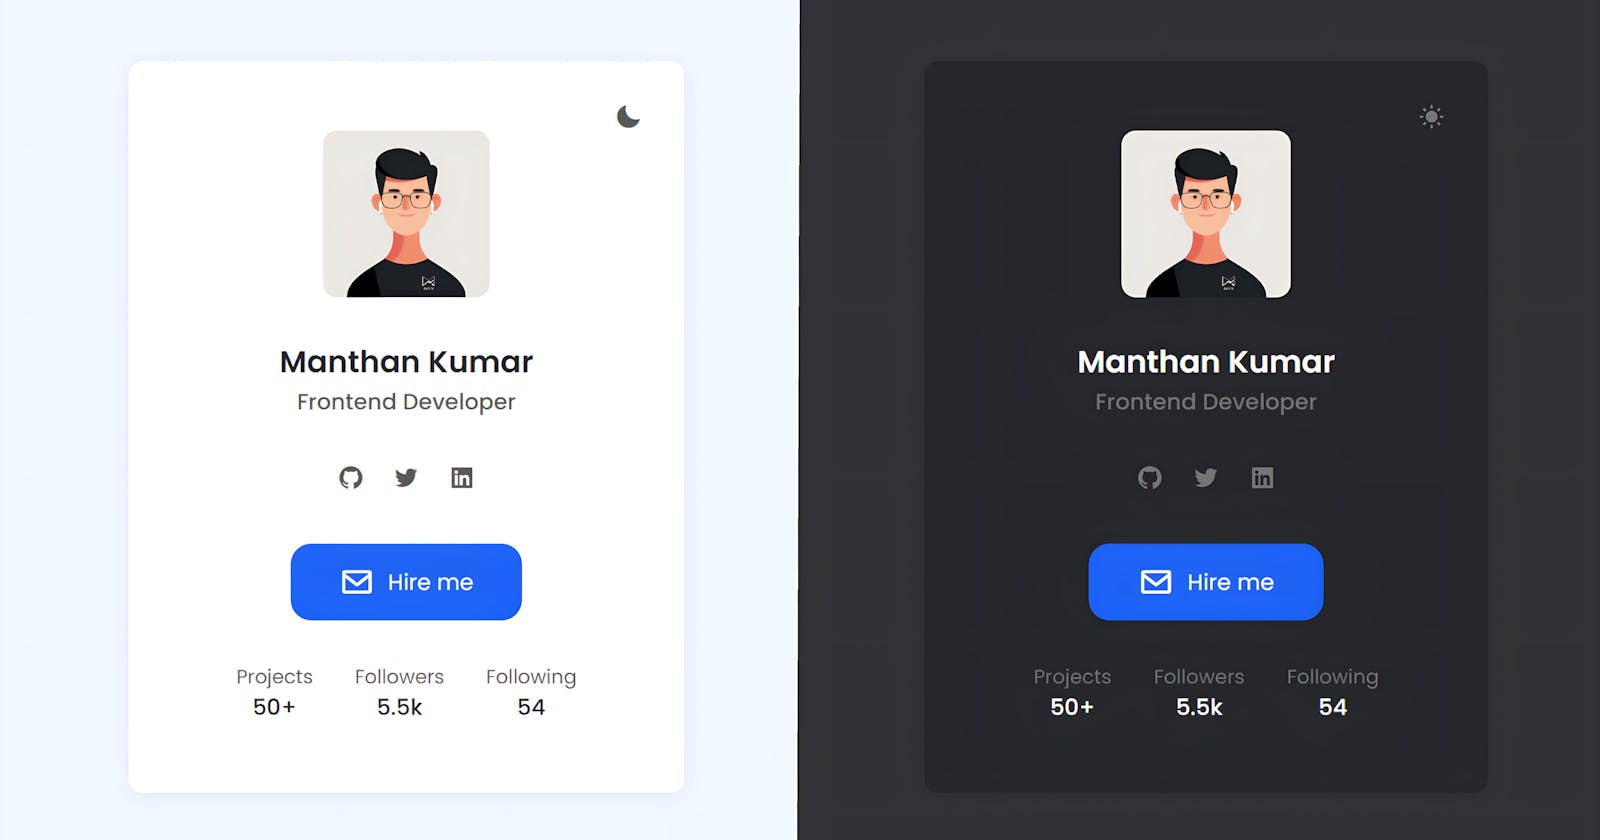 Create an Animated Profile Card UI using HTML, CSS, and JavaScript